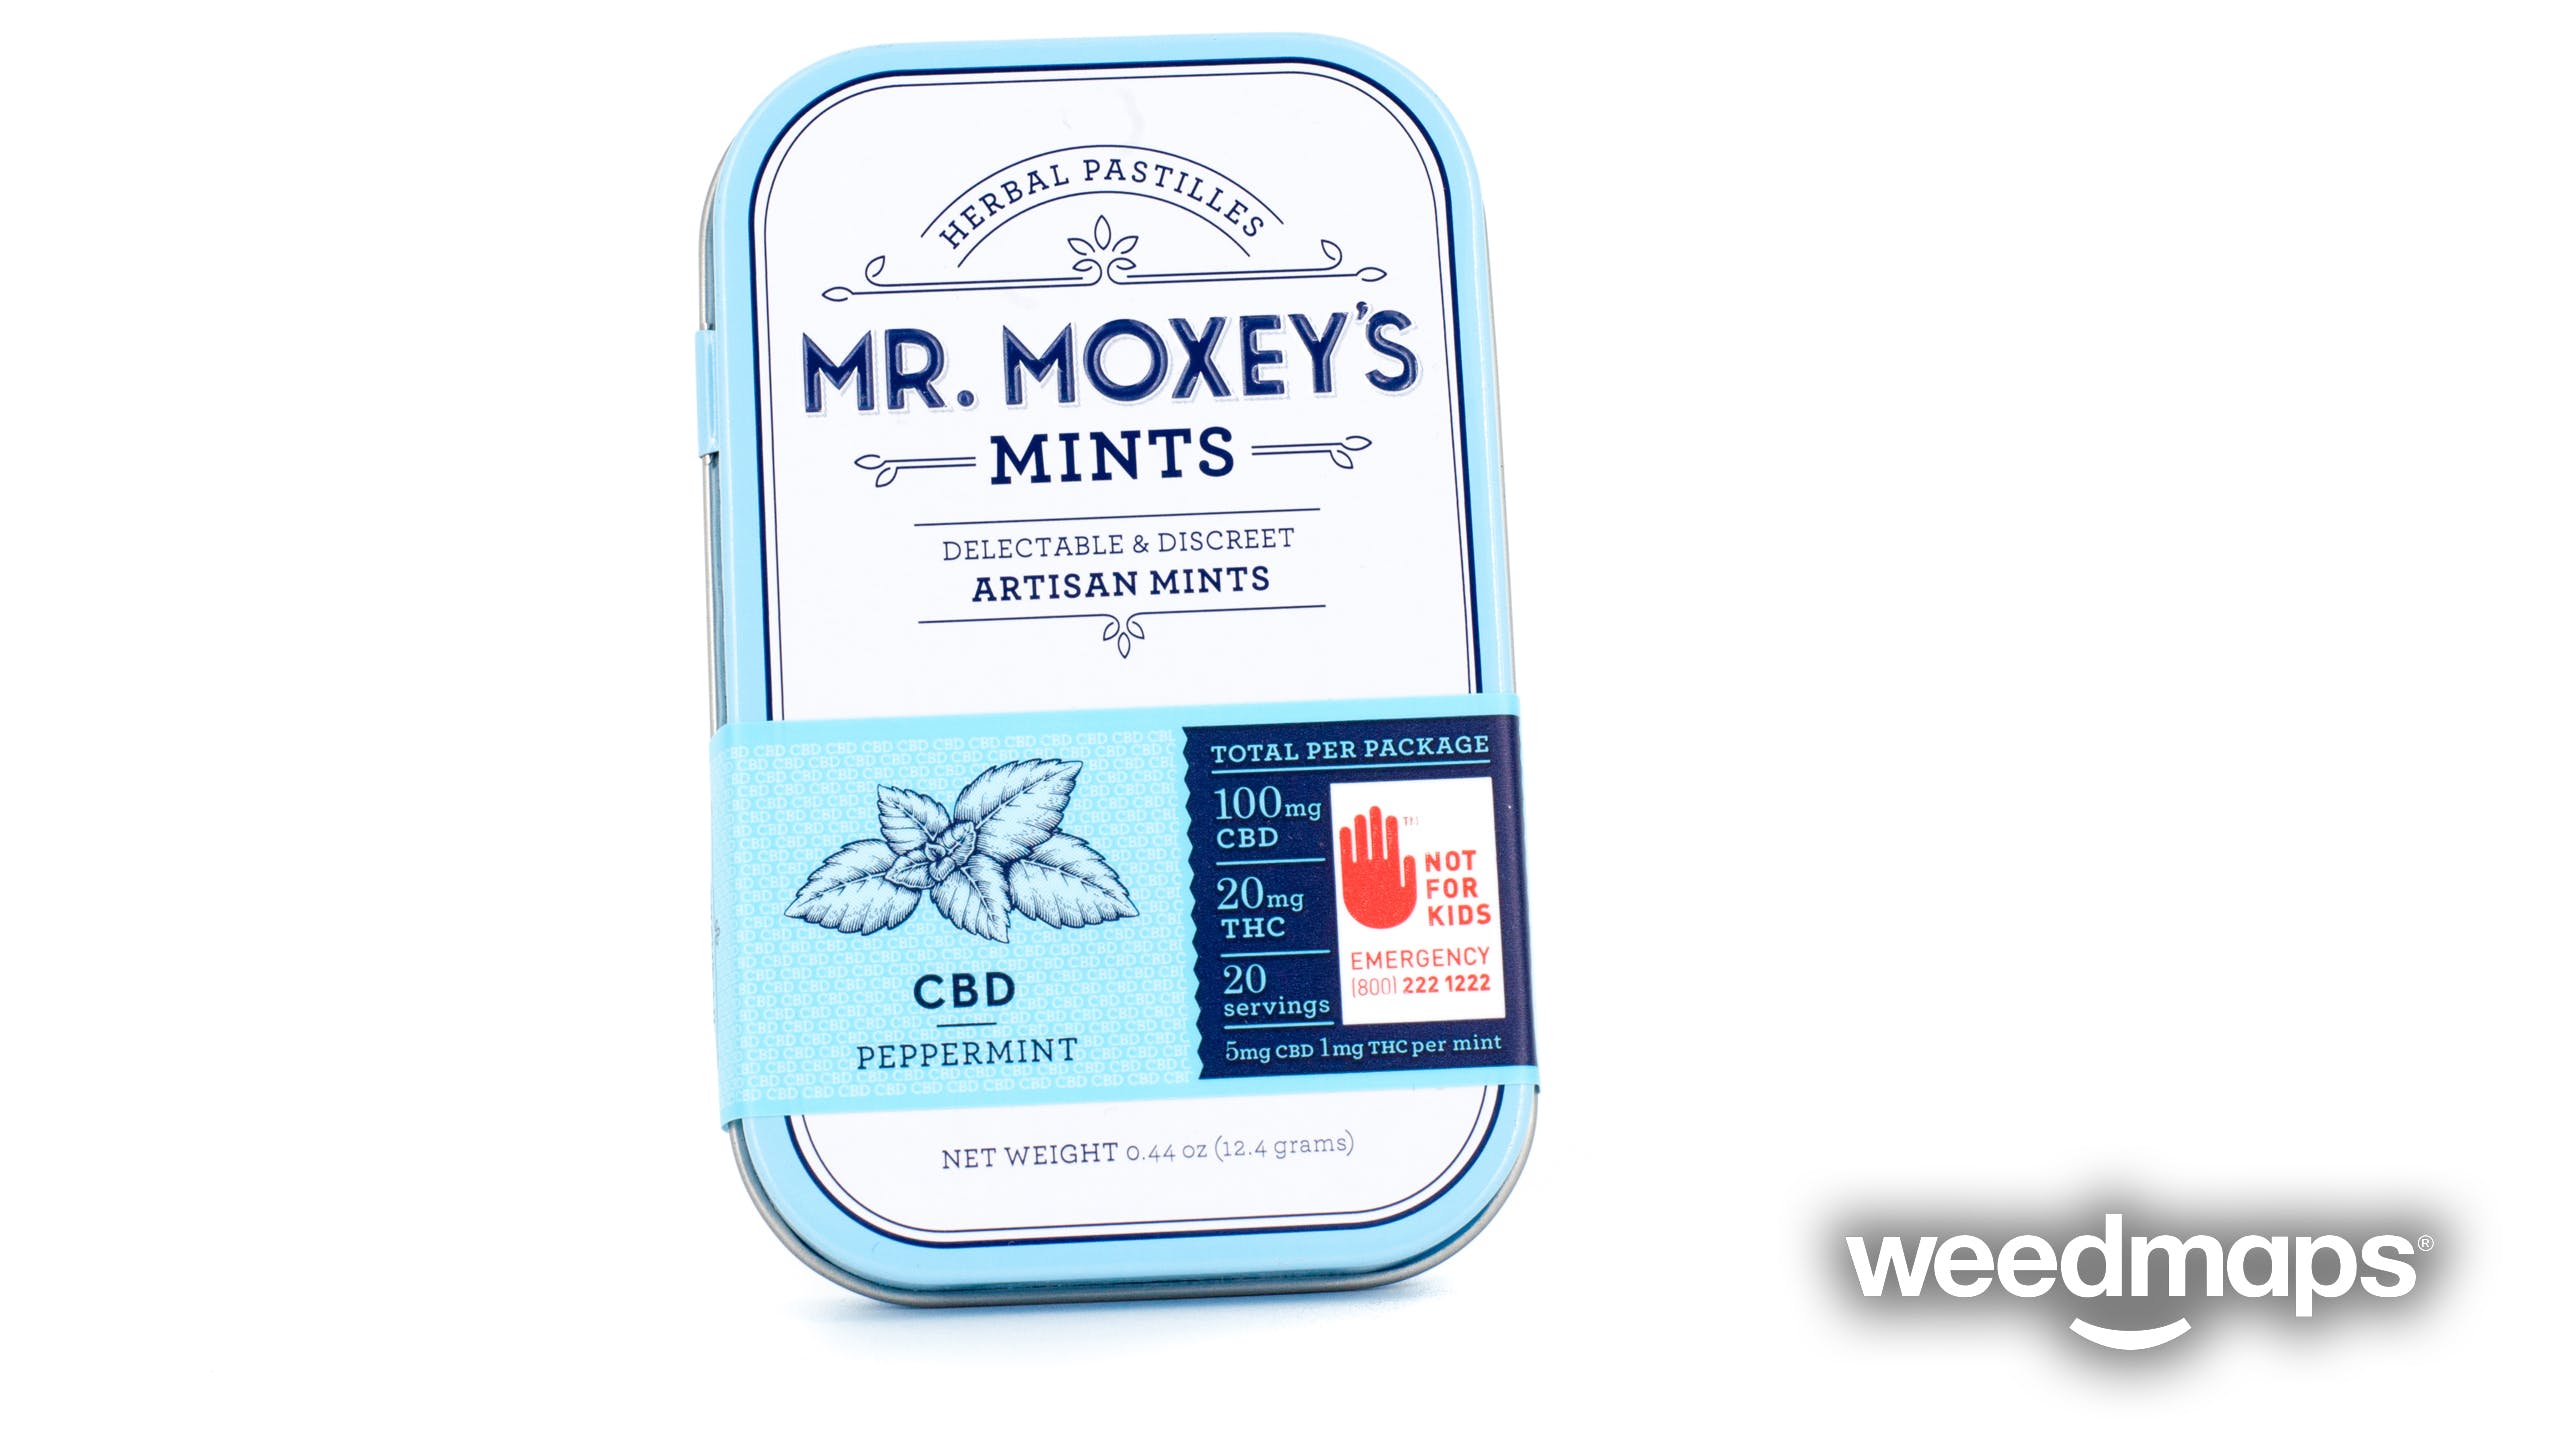 Mr. Moxey's Mints - CBD Peppermint